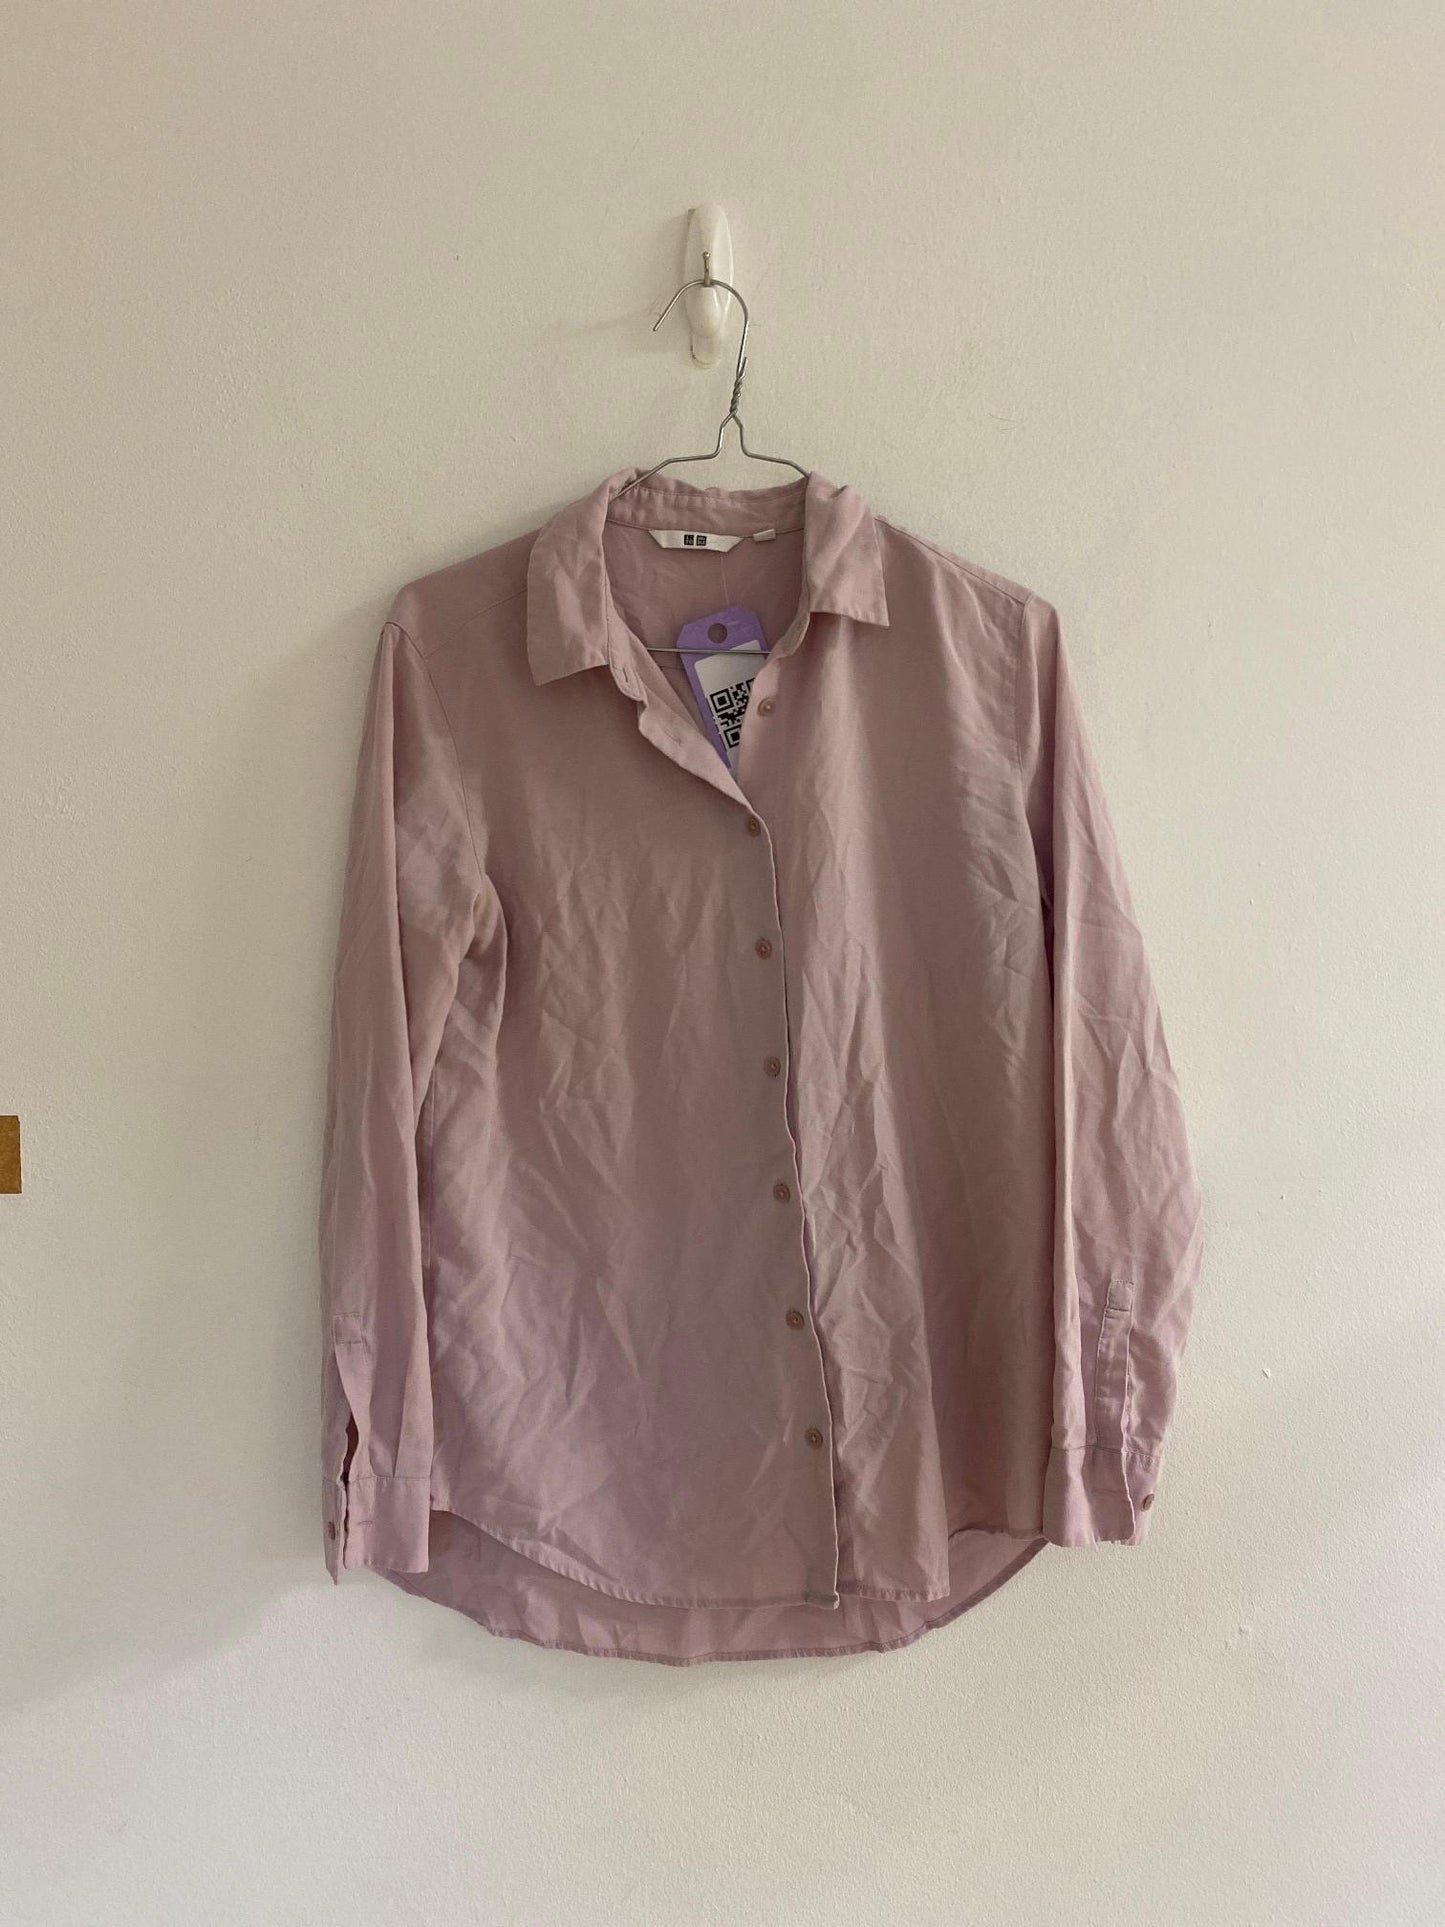 Lilac button up shirt, Uniqlo, Size XS - Damaged Item Sale